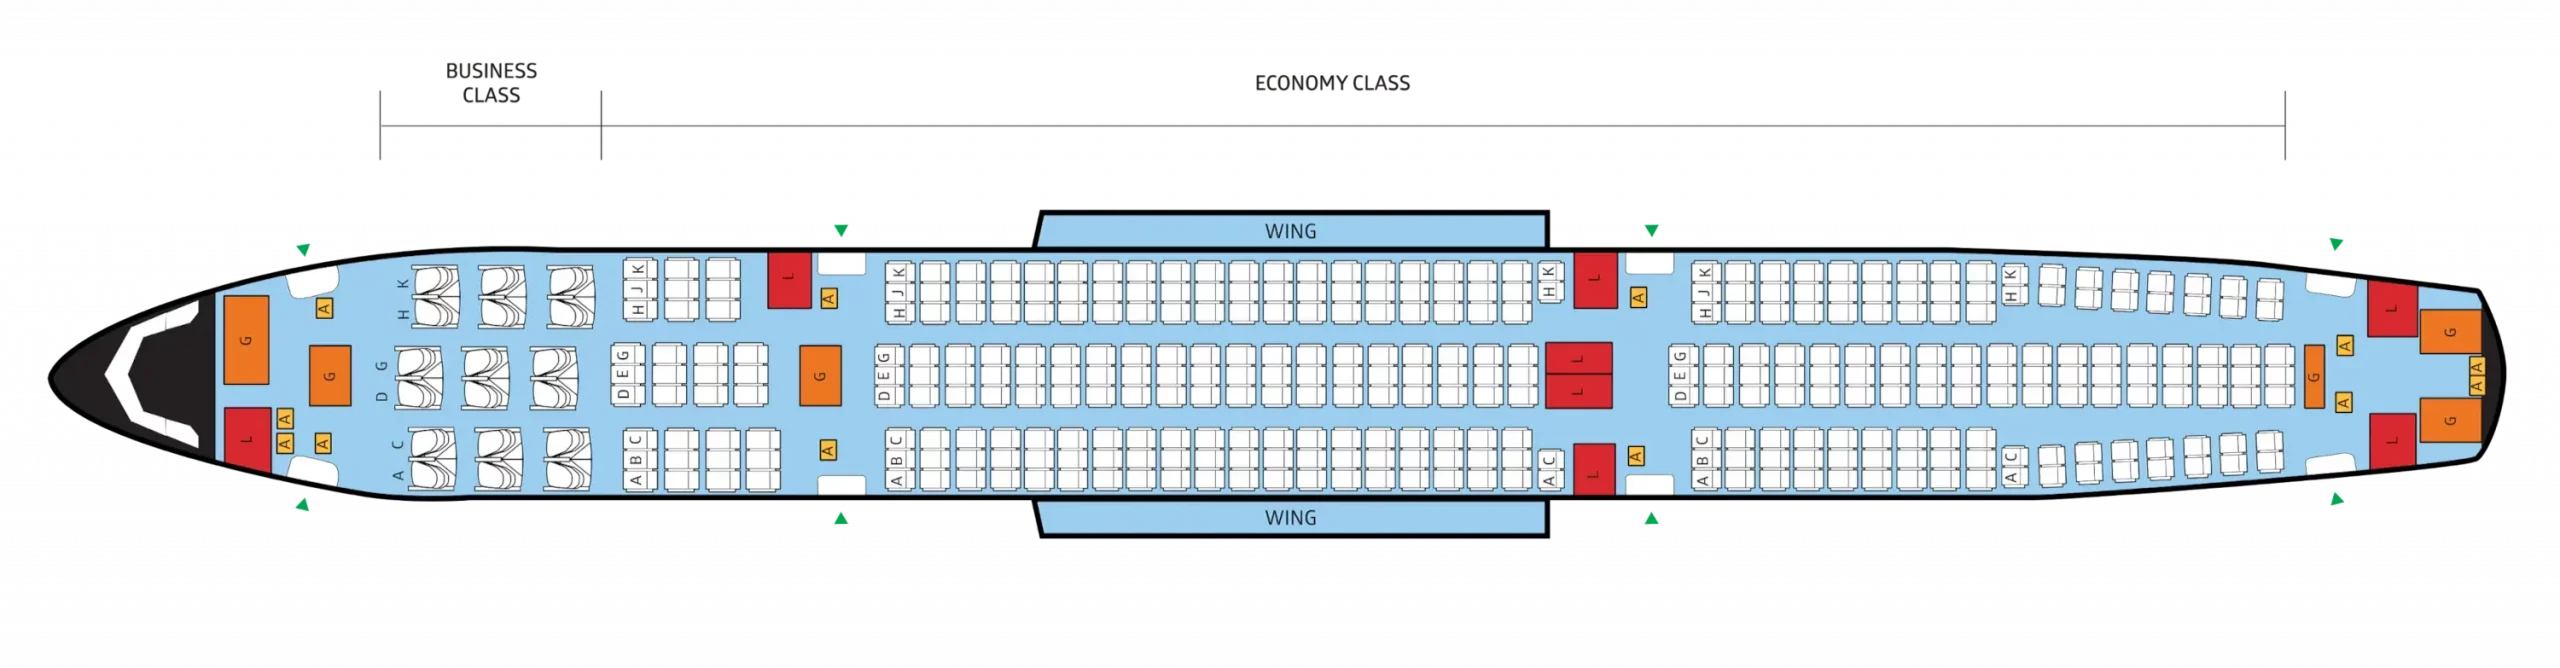 Airbus A330 asientos